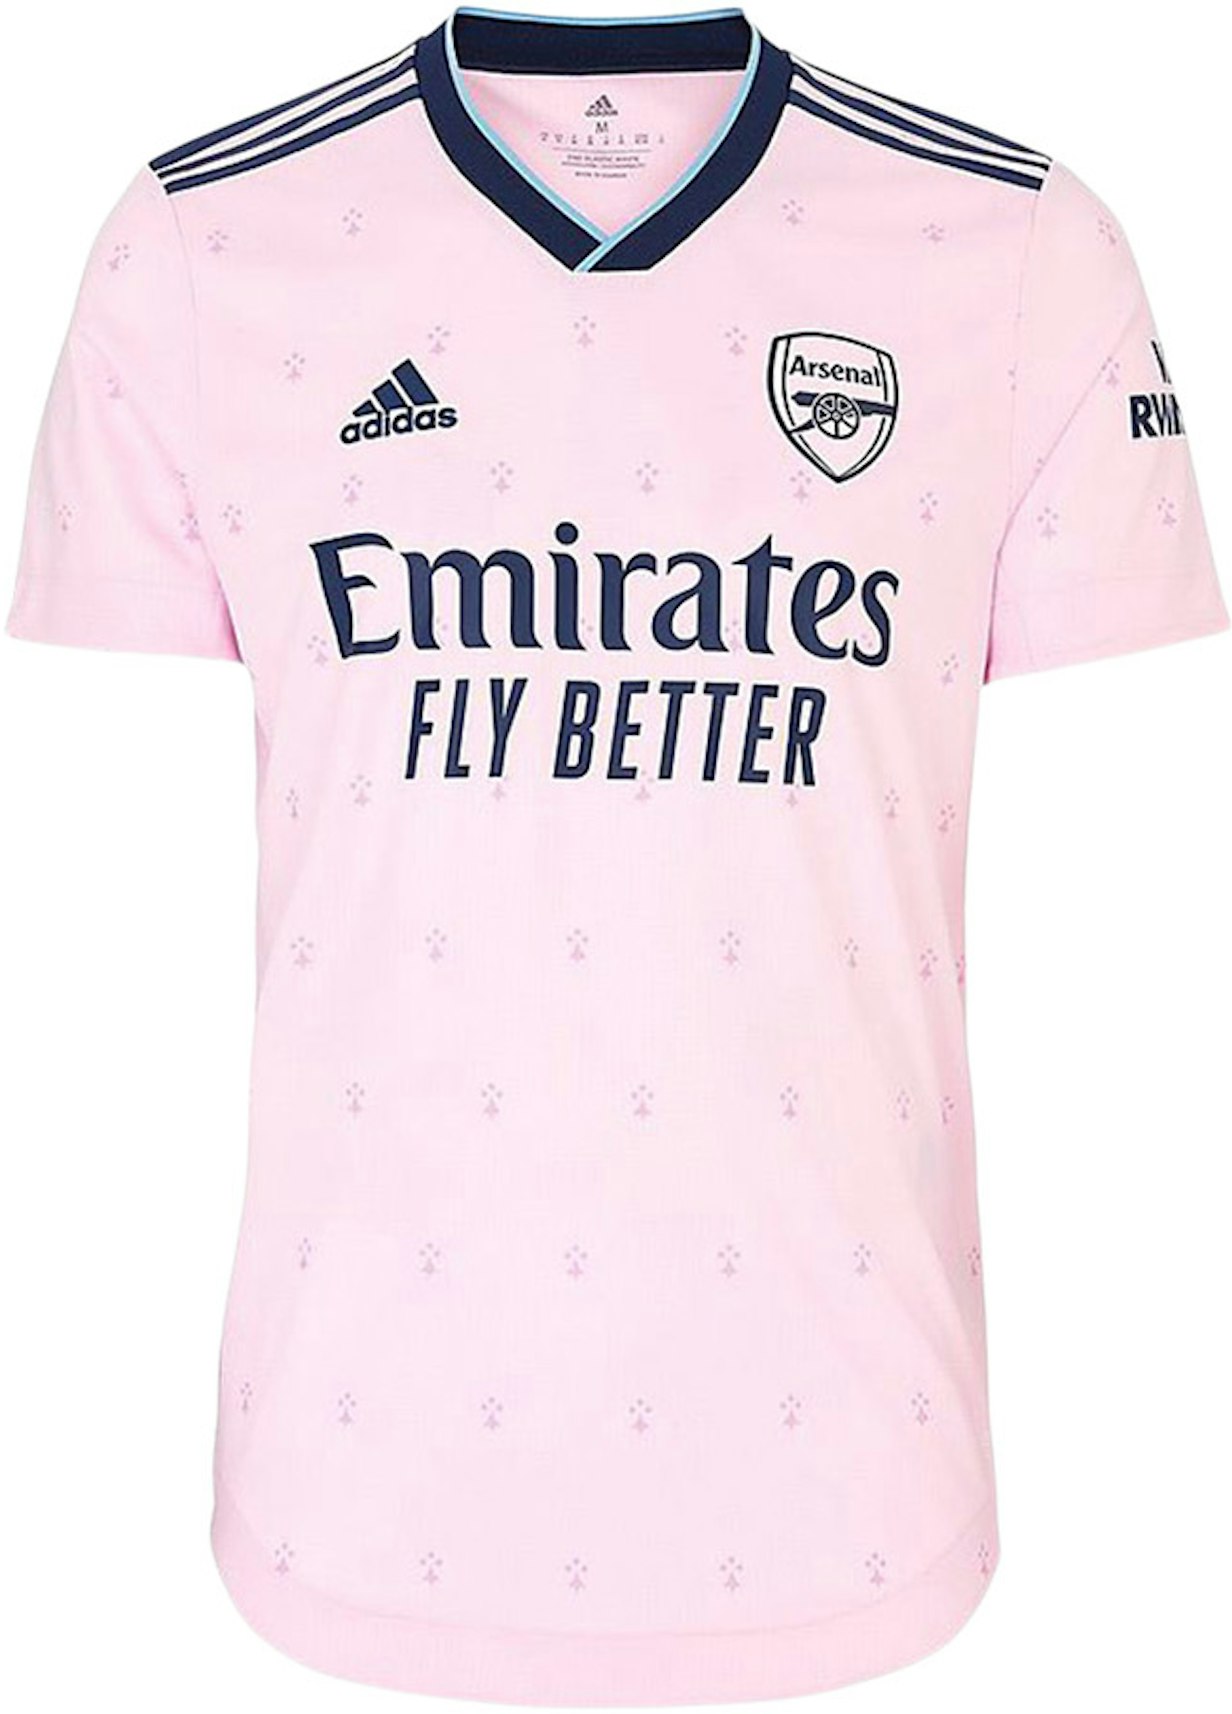 Glad Jumping jack discretie adidas Arsenal 22/23 Authentic Third Shirt Shirt Pink Men's - US